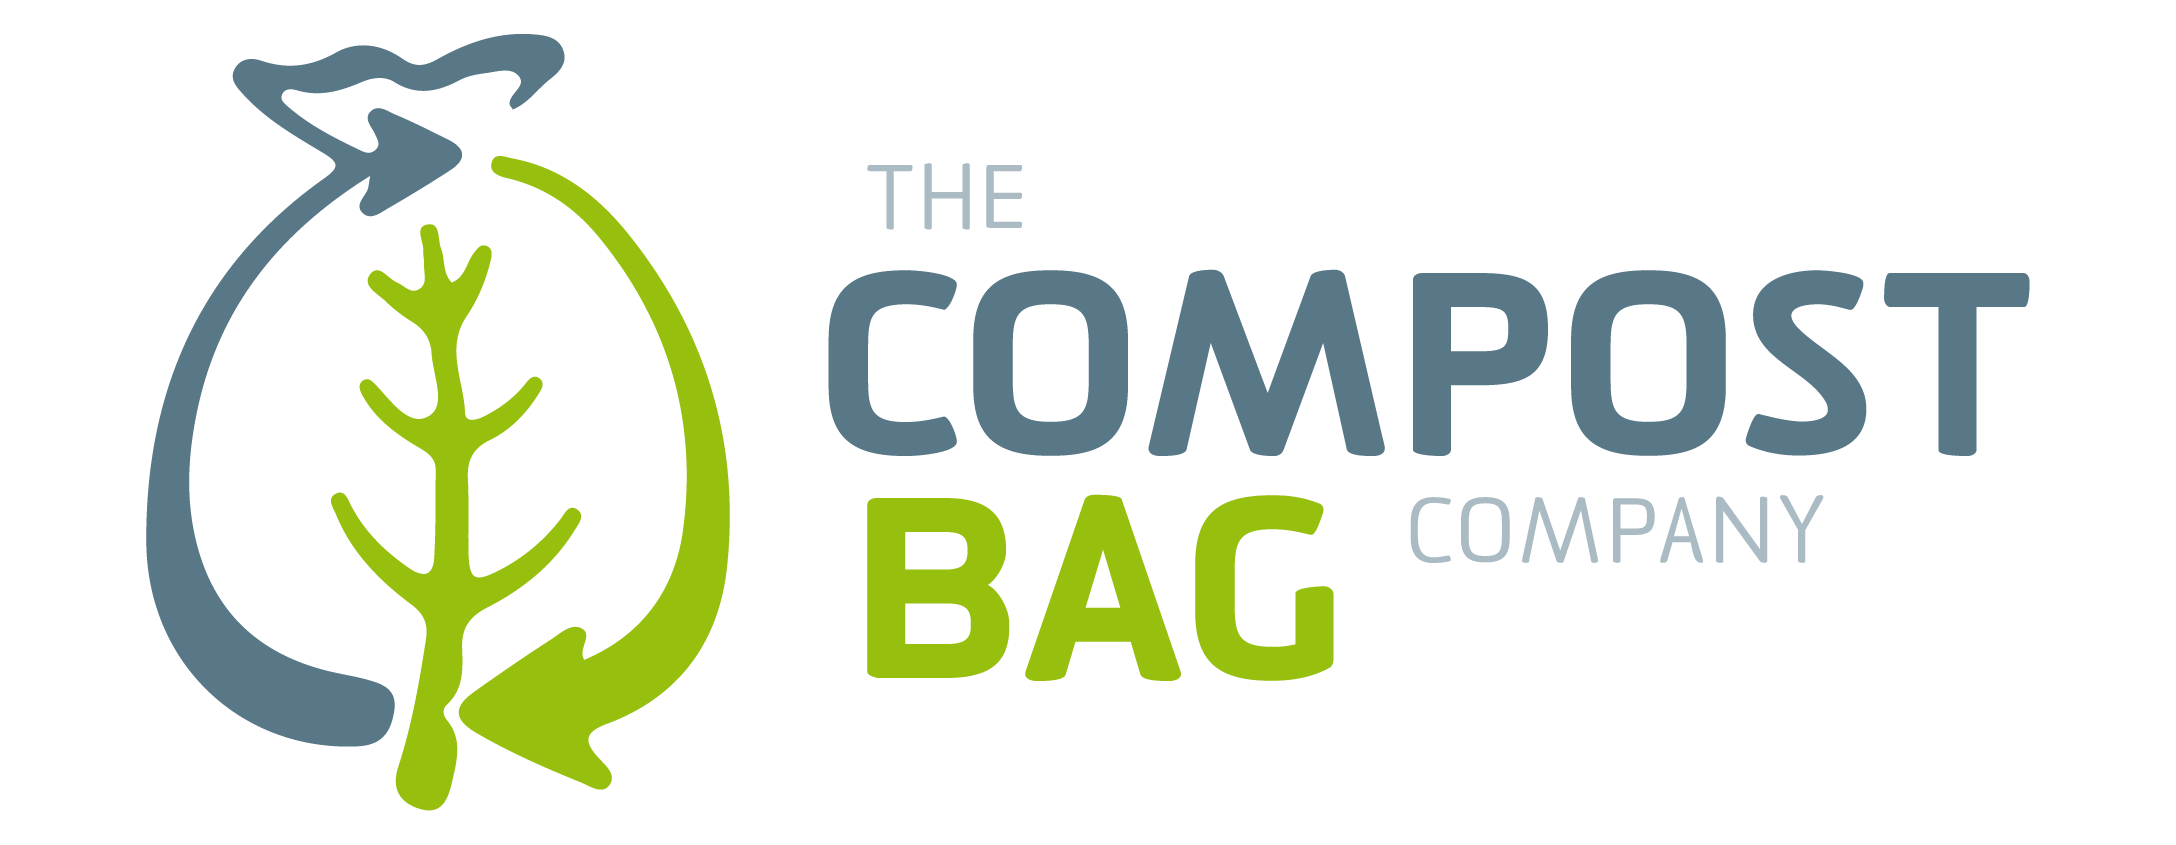 The Compost Bag Company - Circular Online